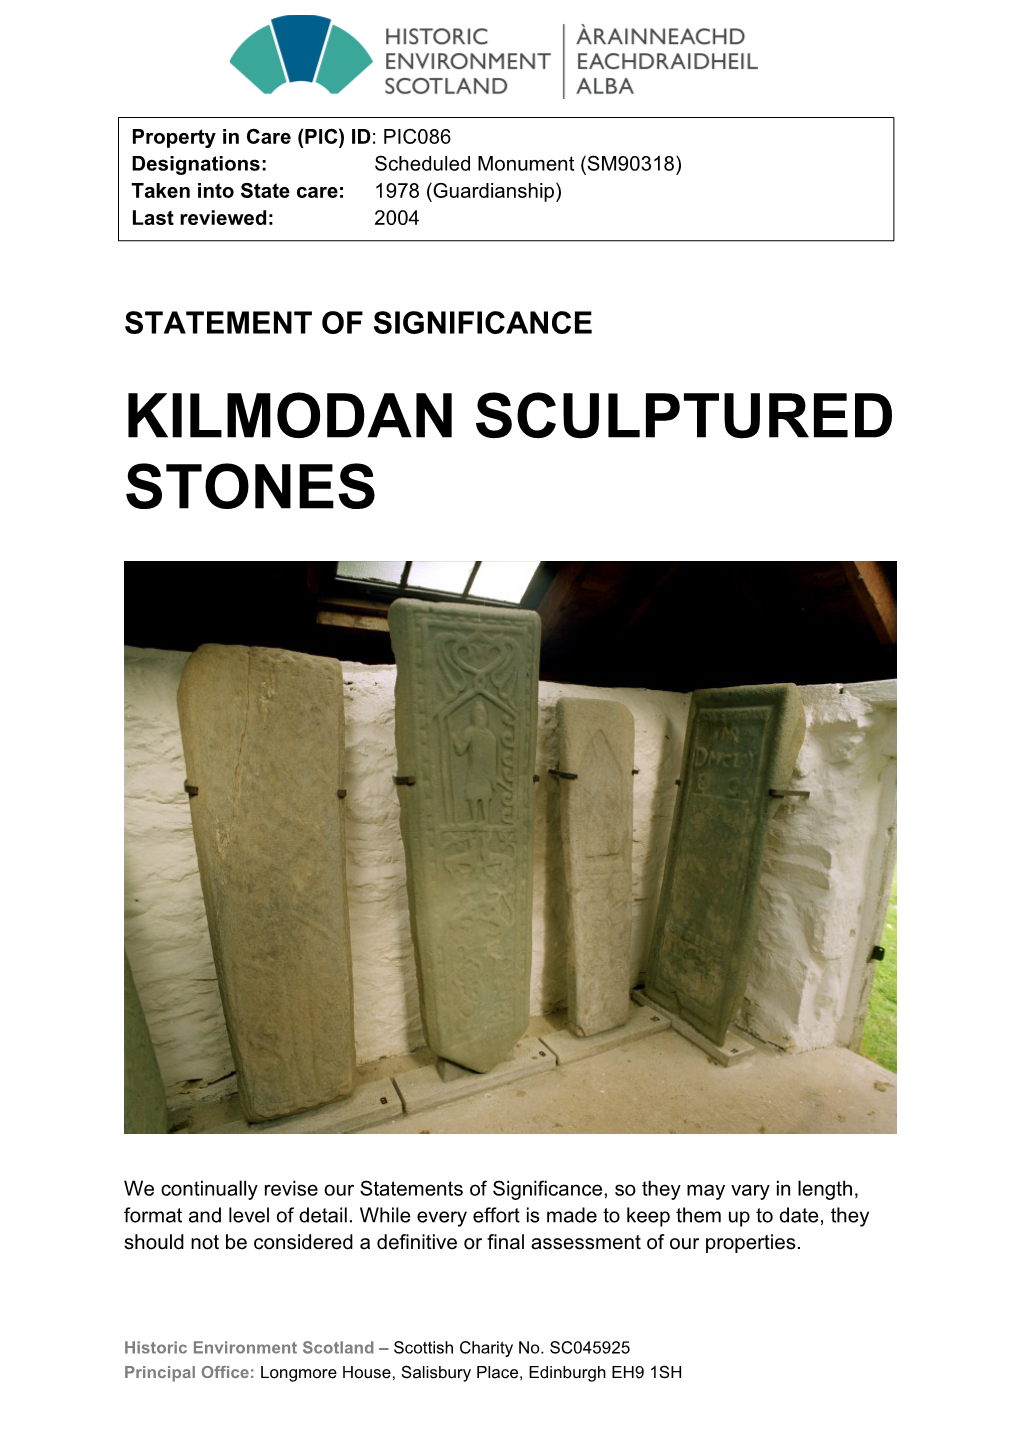 Kilmodan Sculptured Stones Statement of Significance